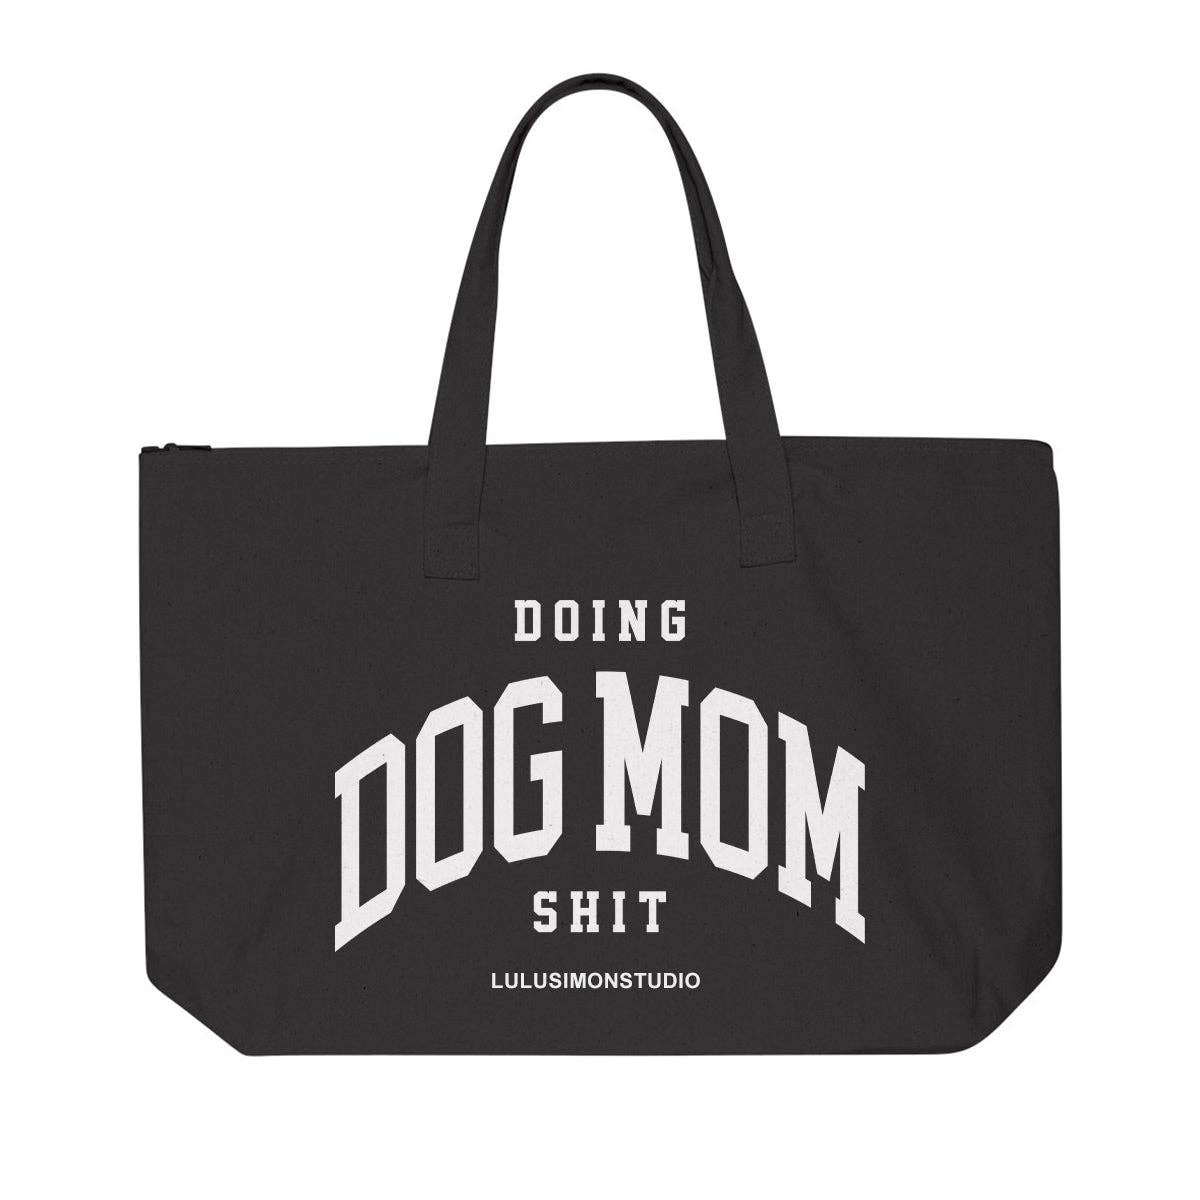 The Doing Dog Mom Sh*t Tote Bag